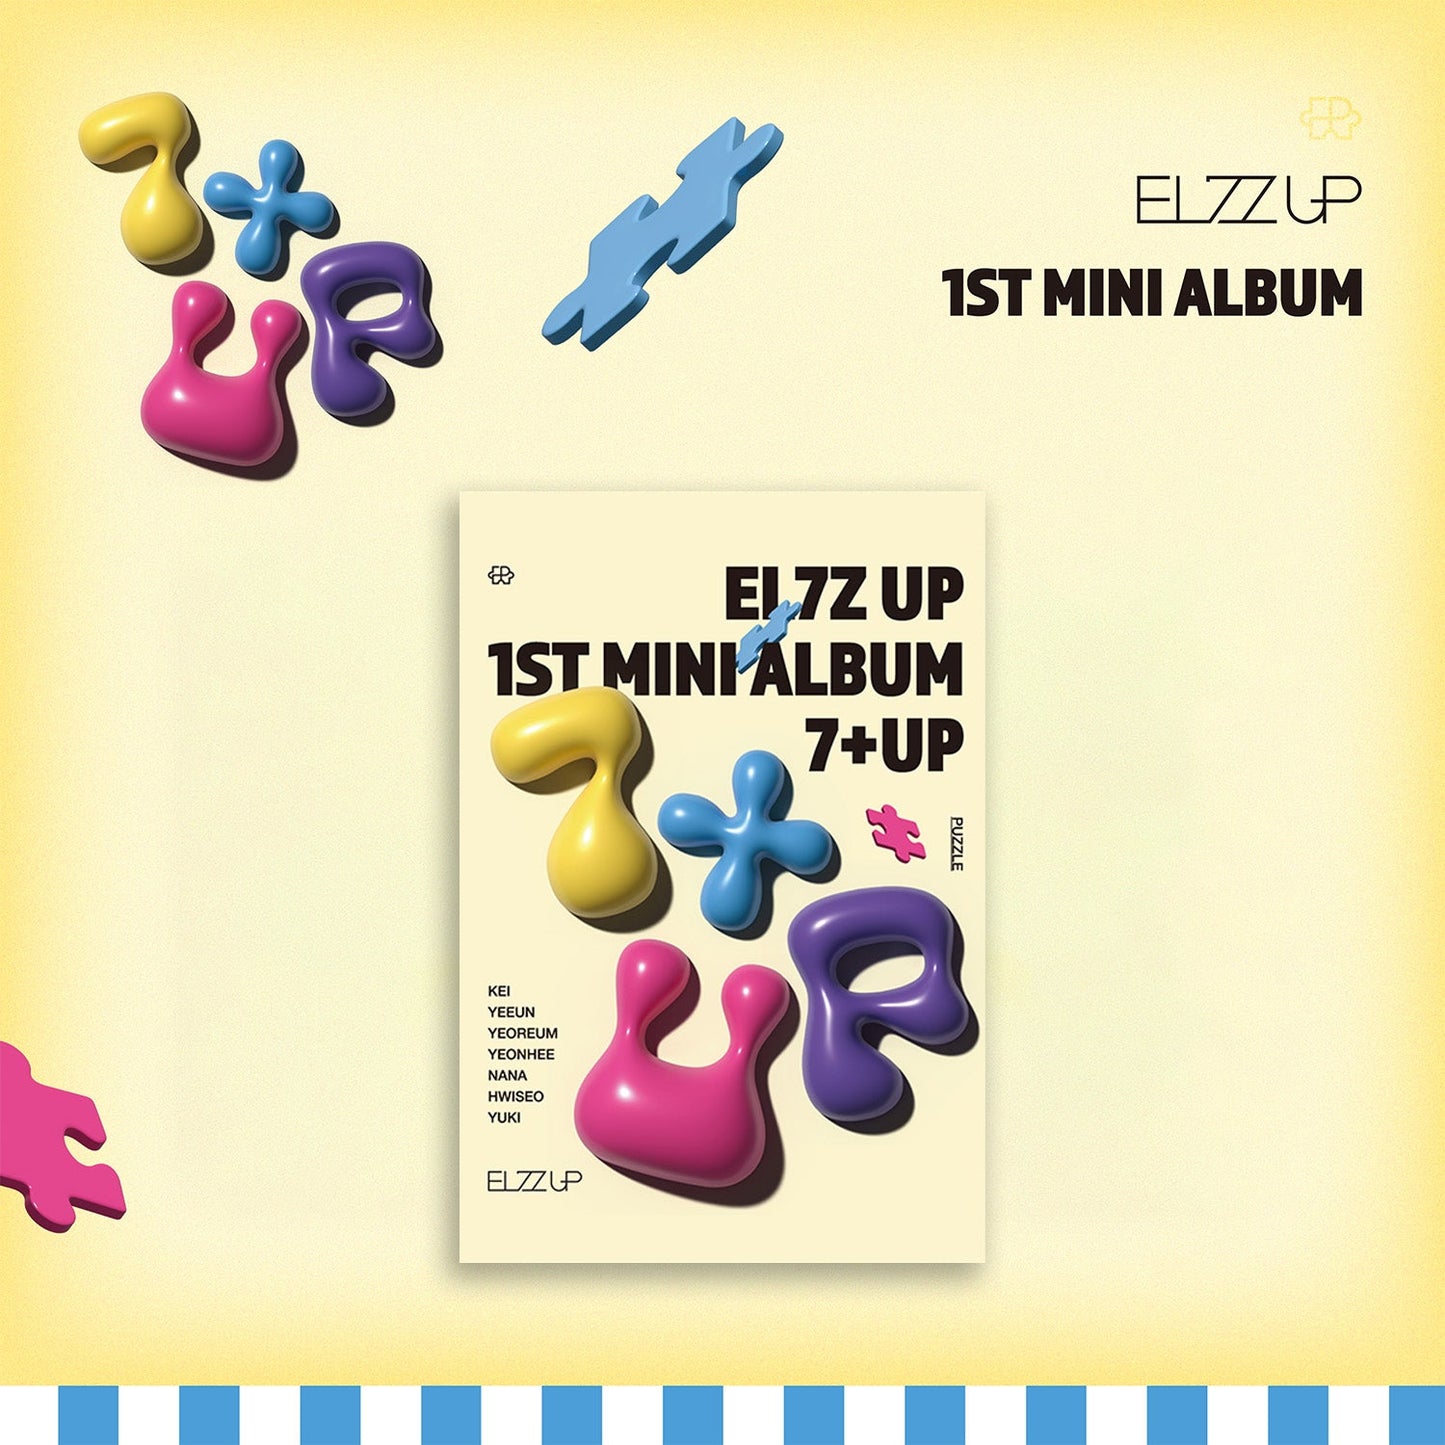 EL7Z UP 1ST MINI ALBUM '7+UP' (PLVE) PUZZLE VERSION COVER